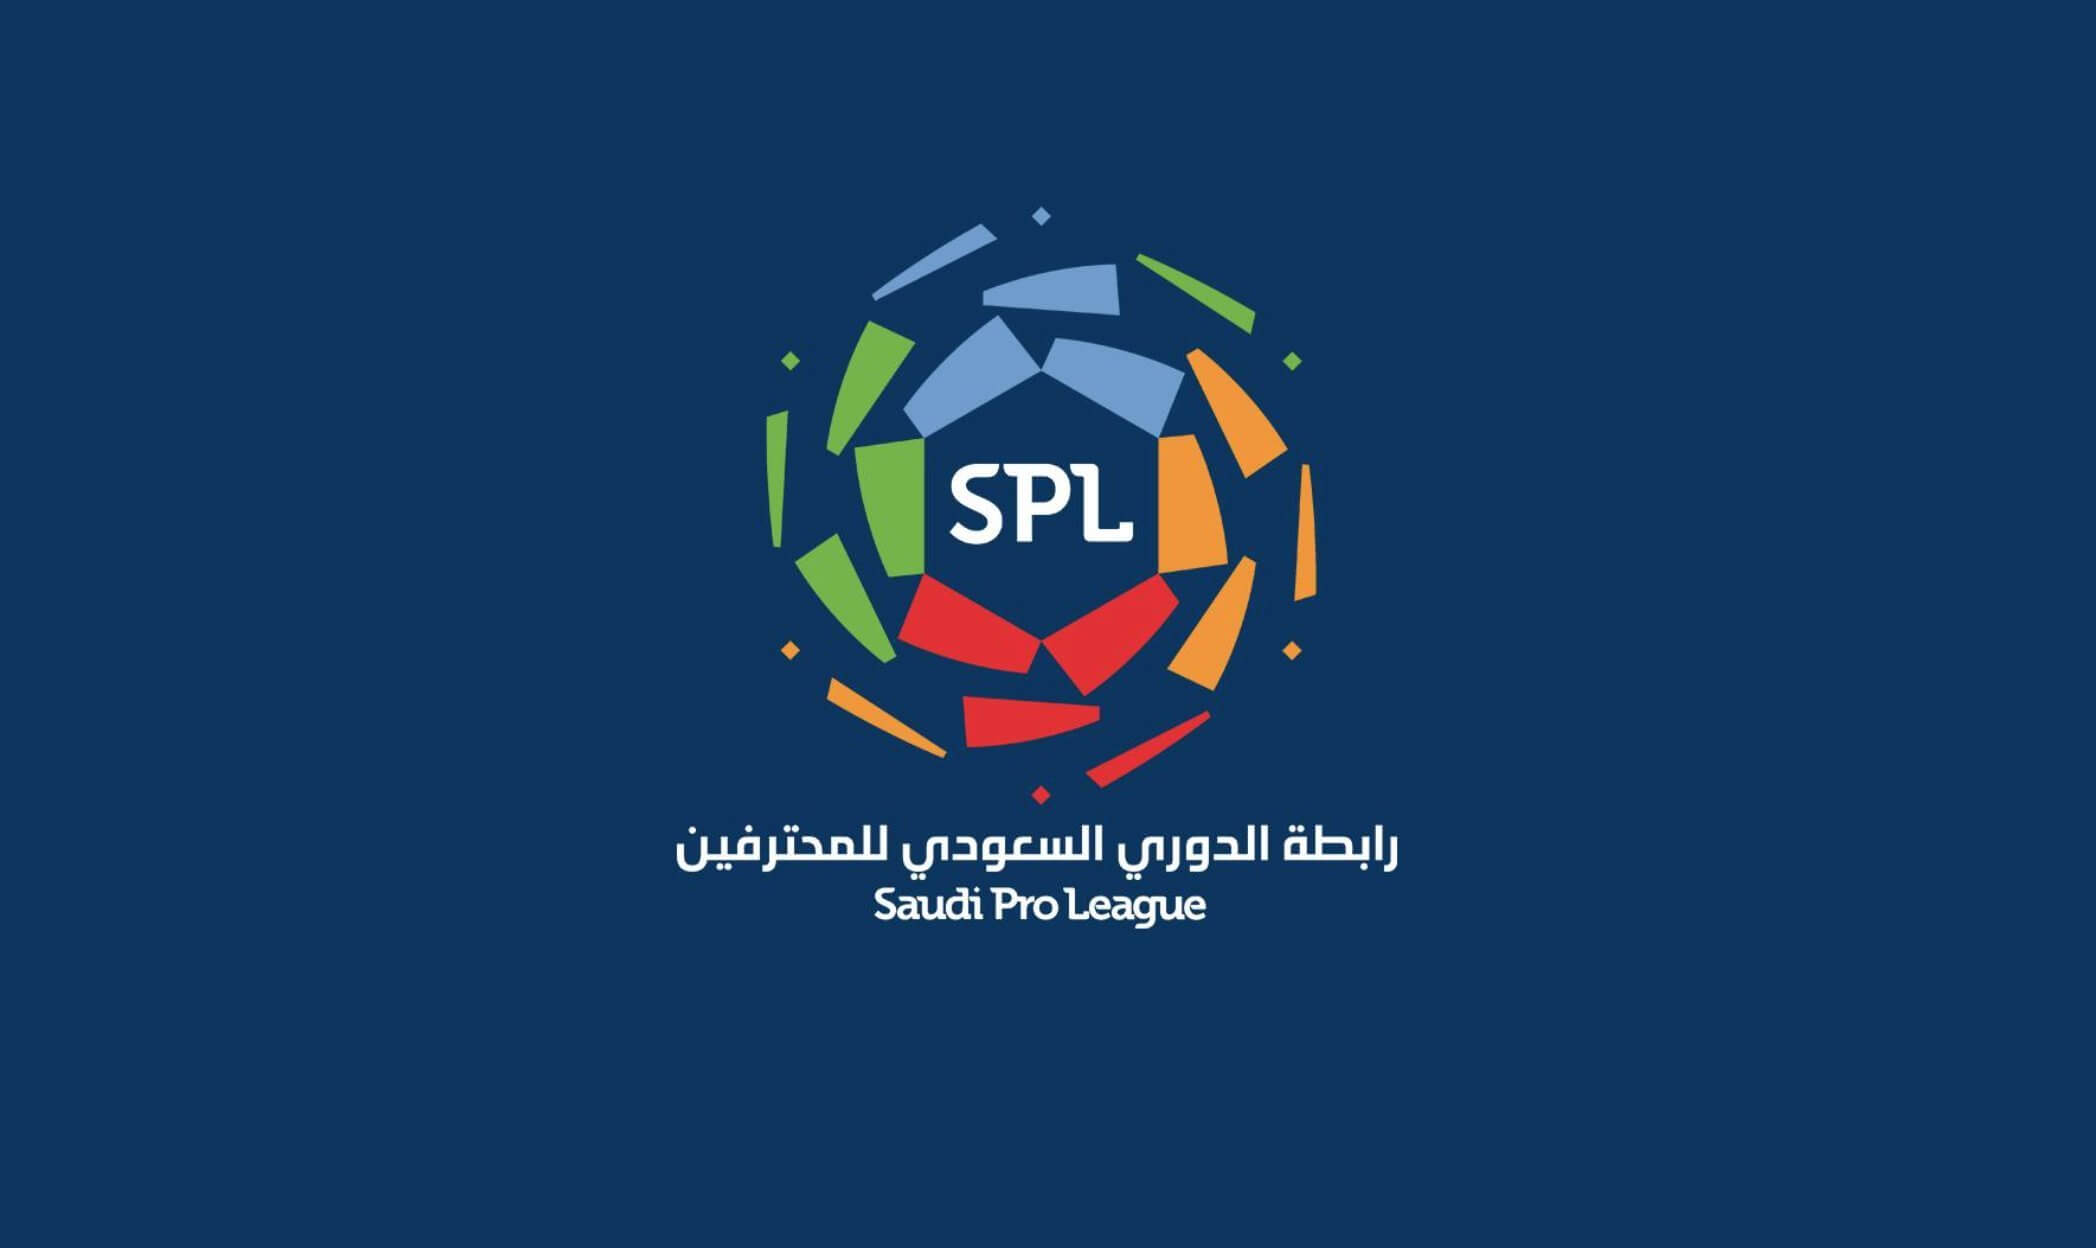 CHempionat Saudovskoj Aravii po futbolu reglament osobennosti TOP kluby favority stavki v bukmekerskoj kontore